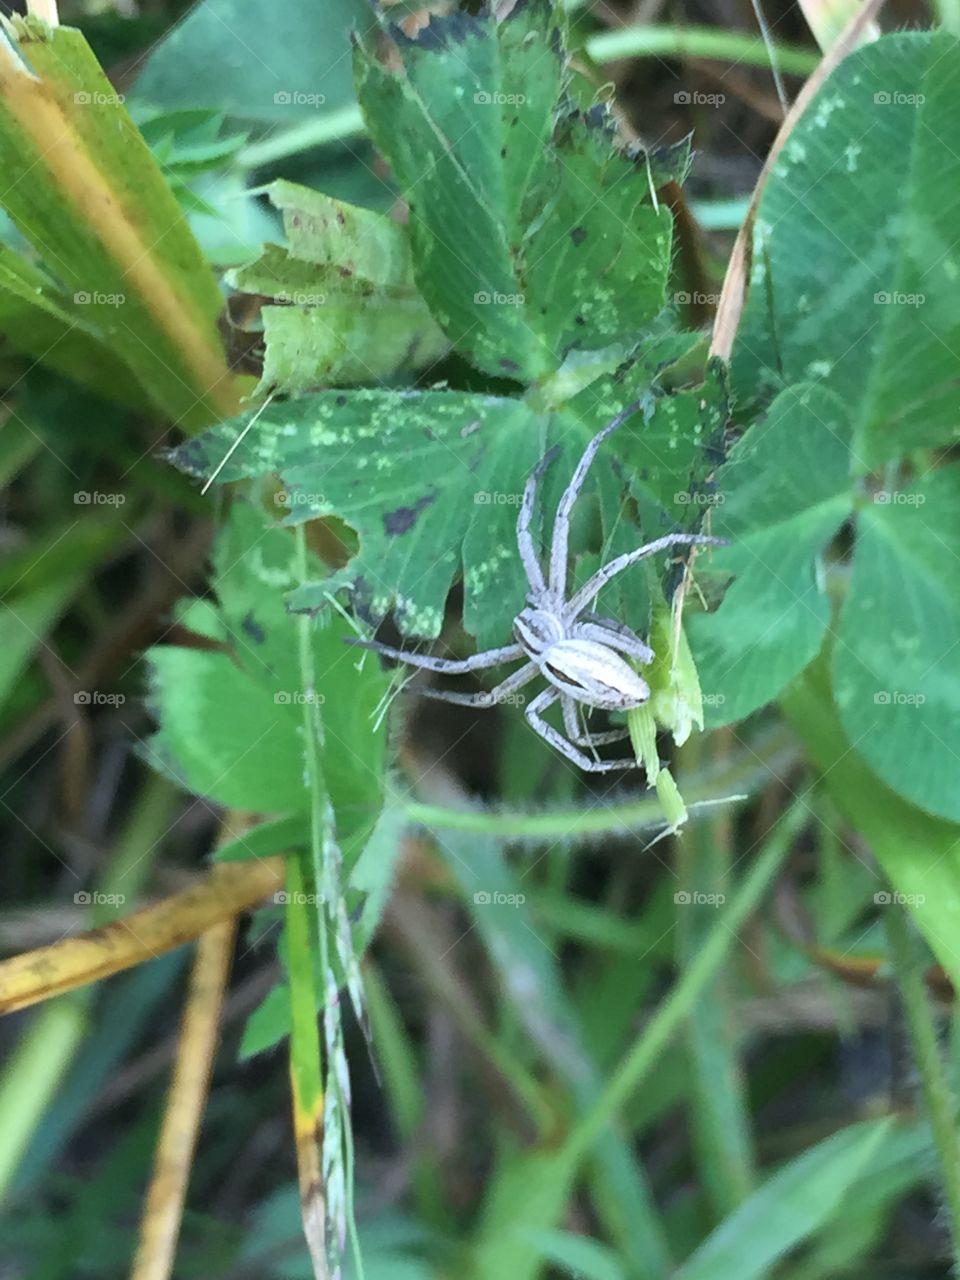 Spider on the prowl through vegetation, macro shot.